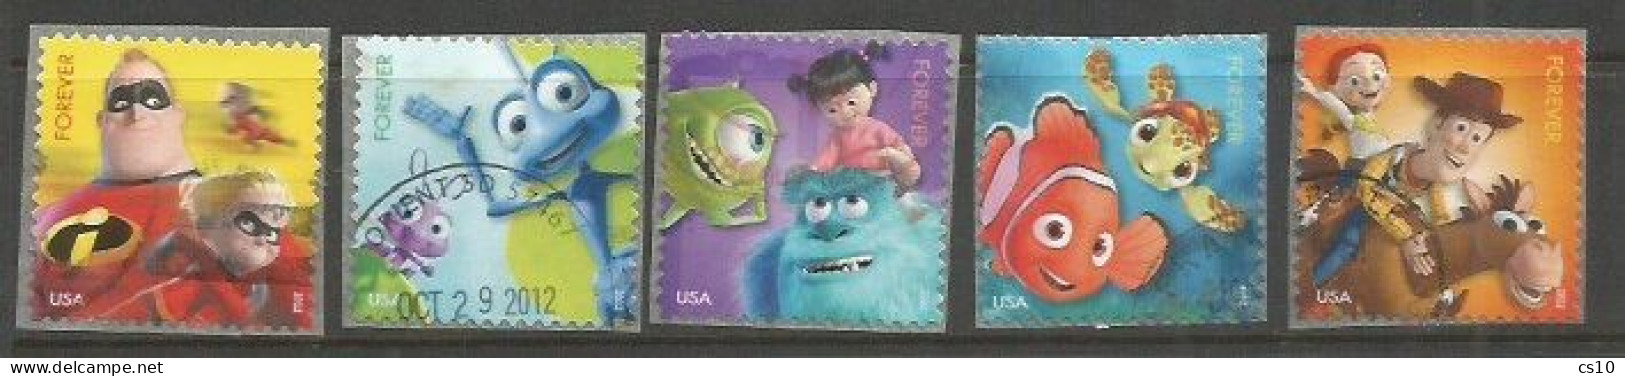 USA 2012 Disney Pixar "Mail A Smile" Sc.# 4677/81 Cpl 5v Set VFU : Bug's Life Incredibles Nemo Toy Story Monsters - Multiples & Strips